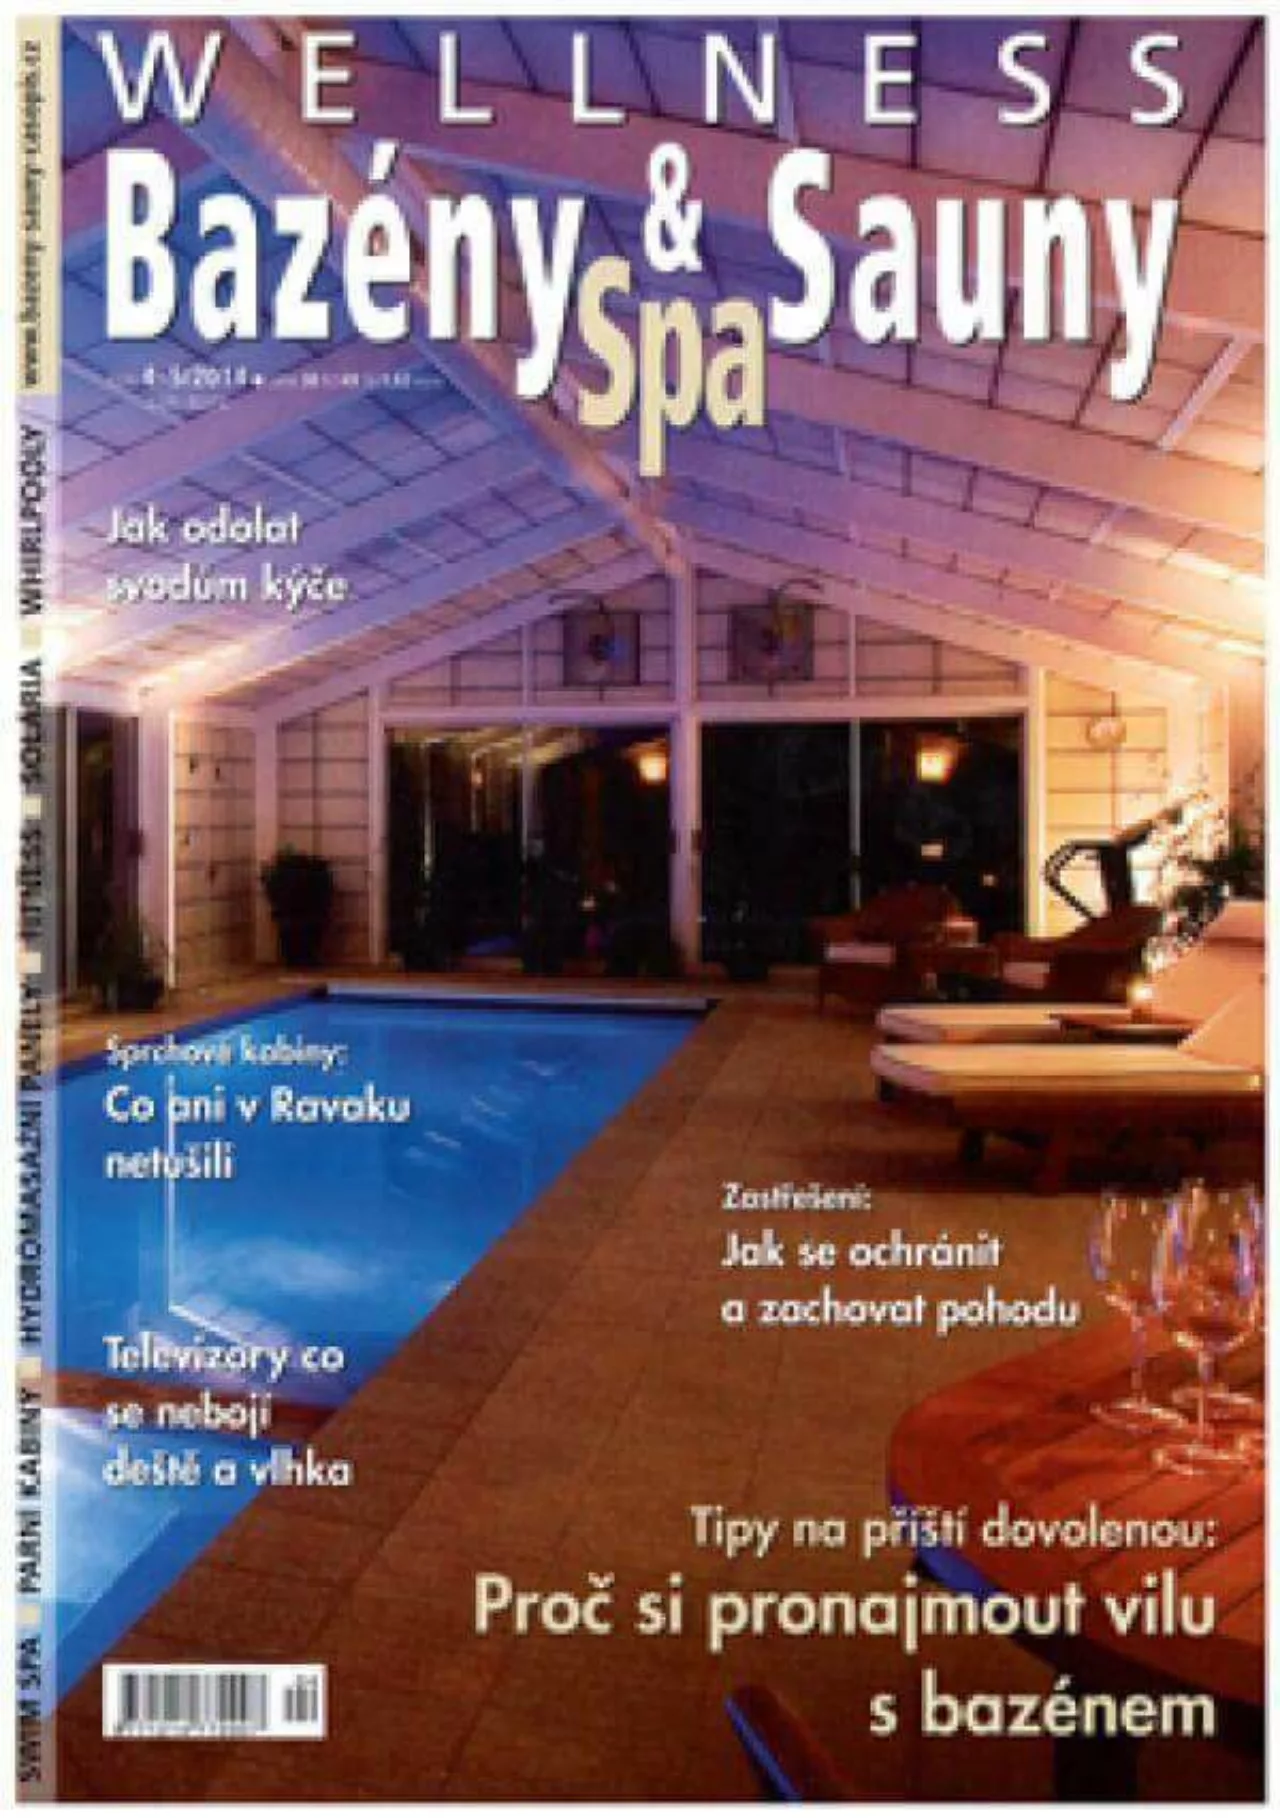 Bazény, Spa & Sauny 4-5/2014 | Blog - Microwell